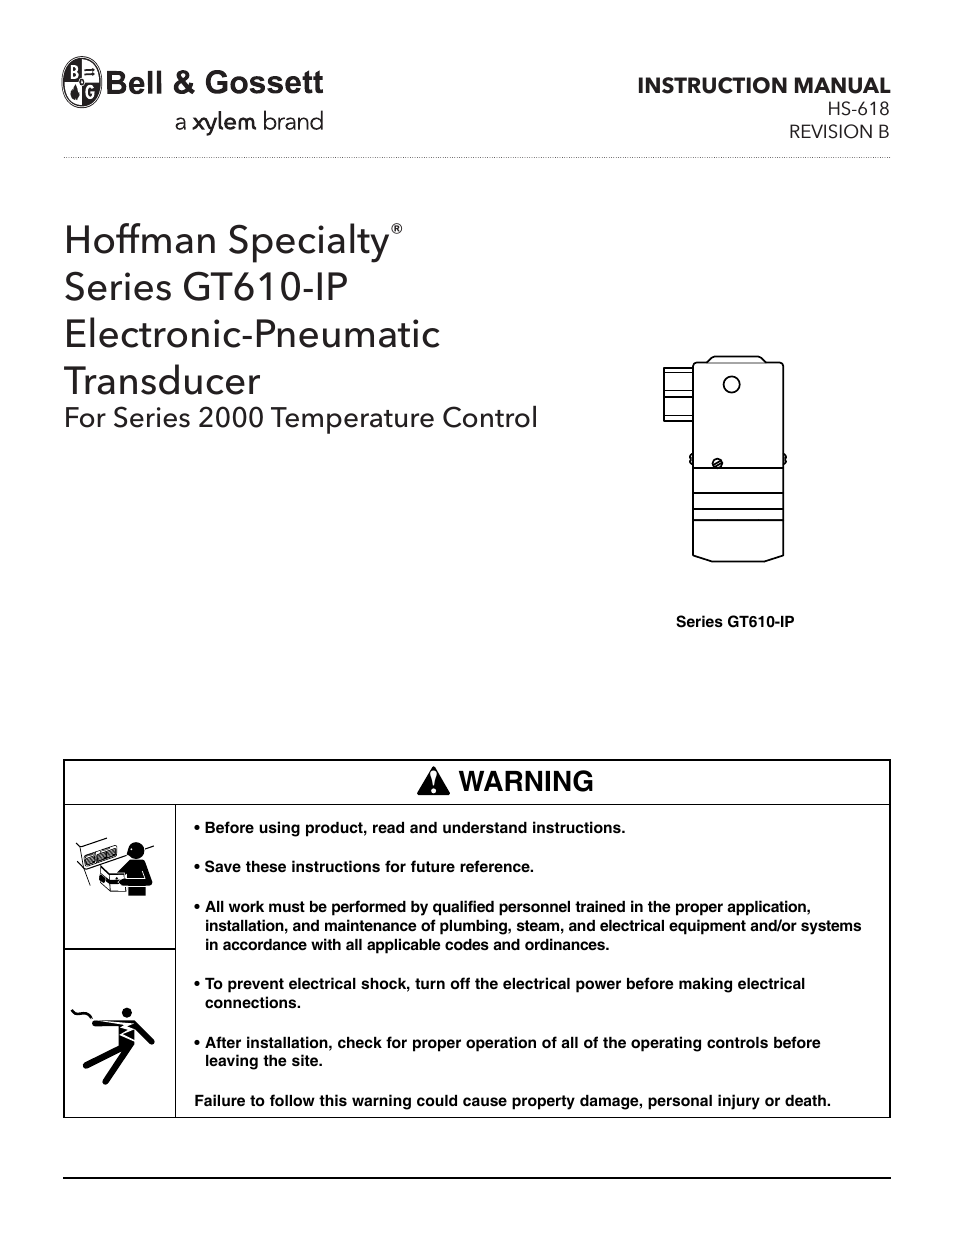 HS 618B Series GT610-IP Electronic-Pneumatic Transducer